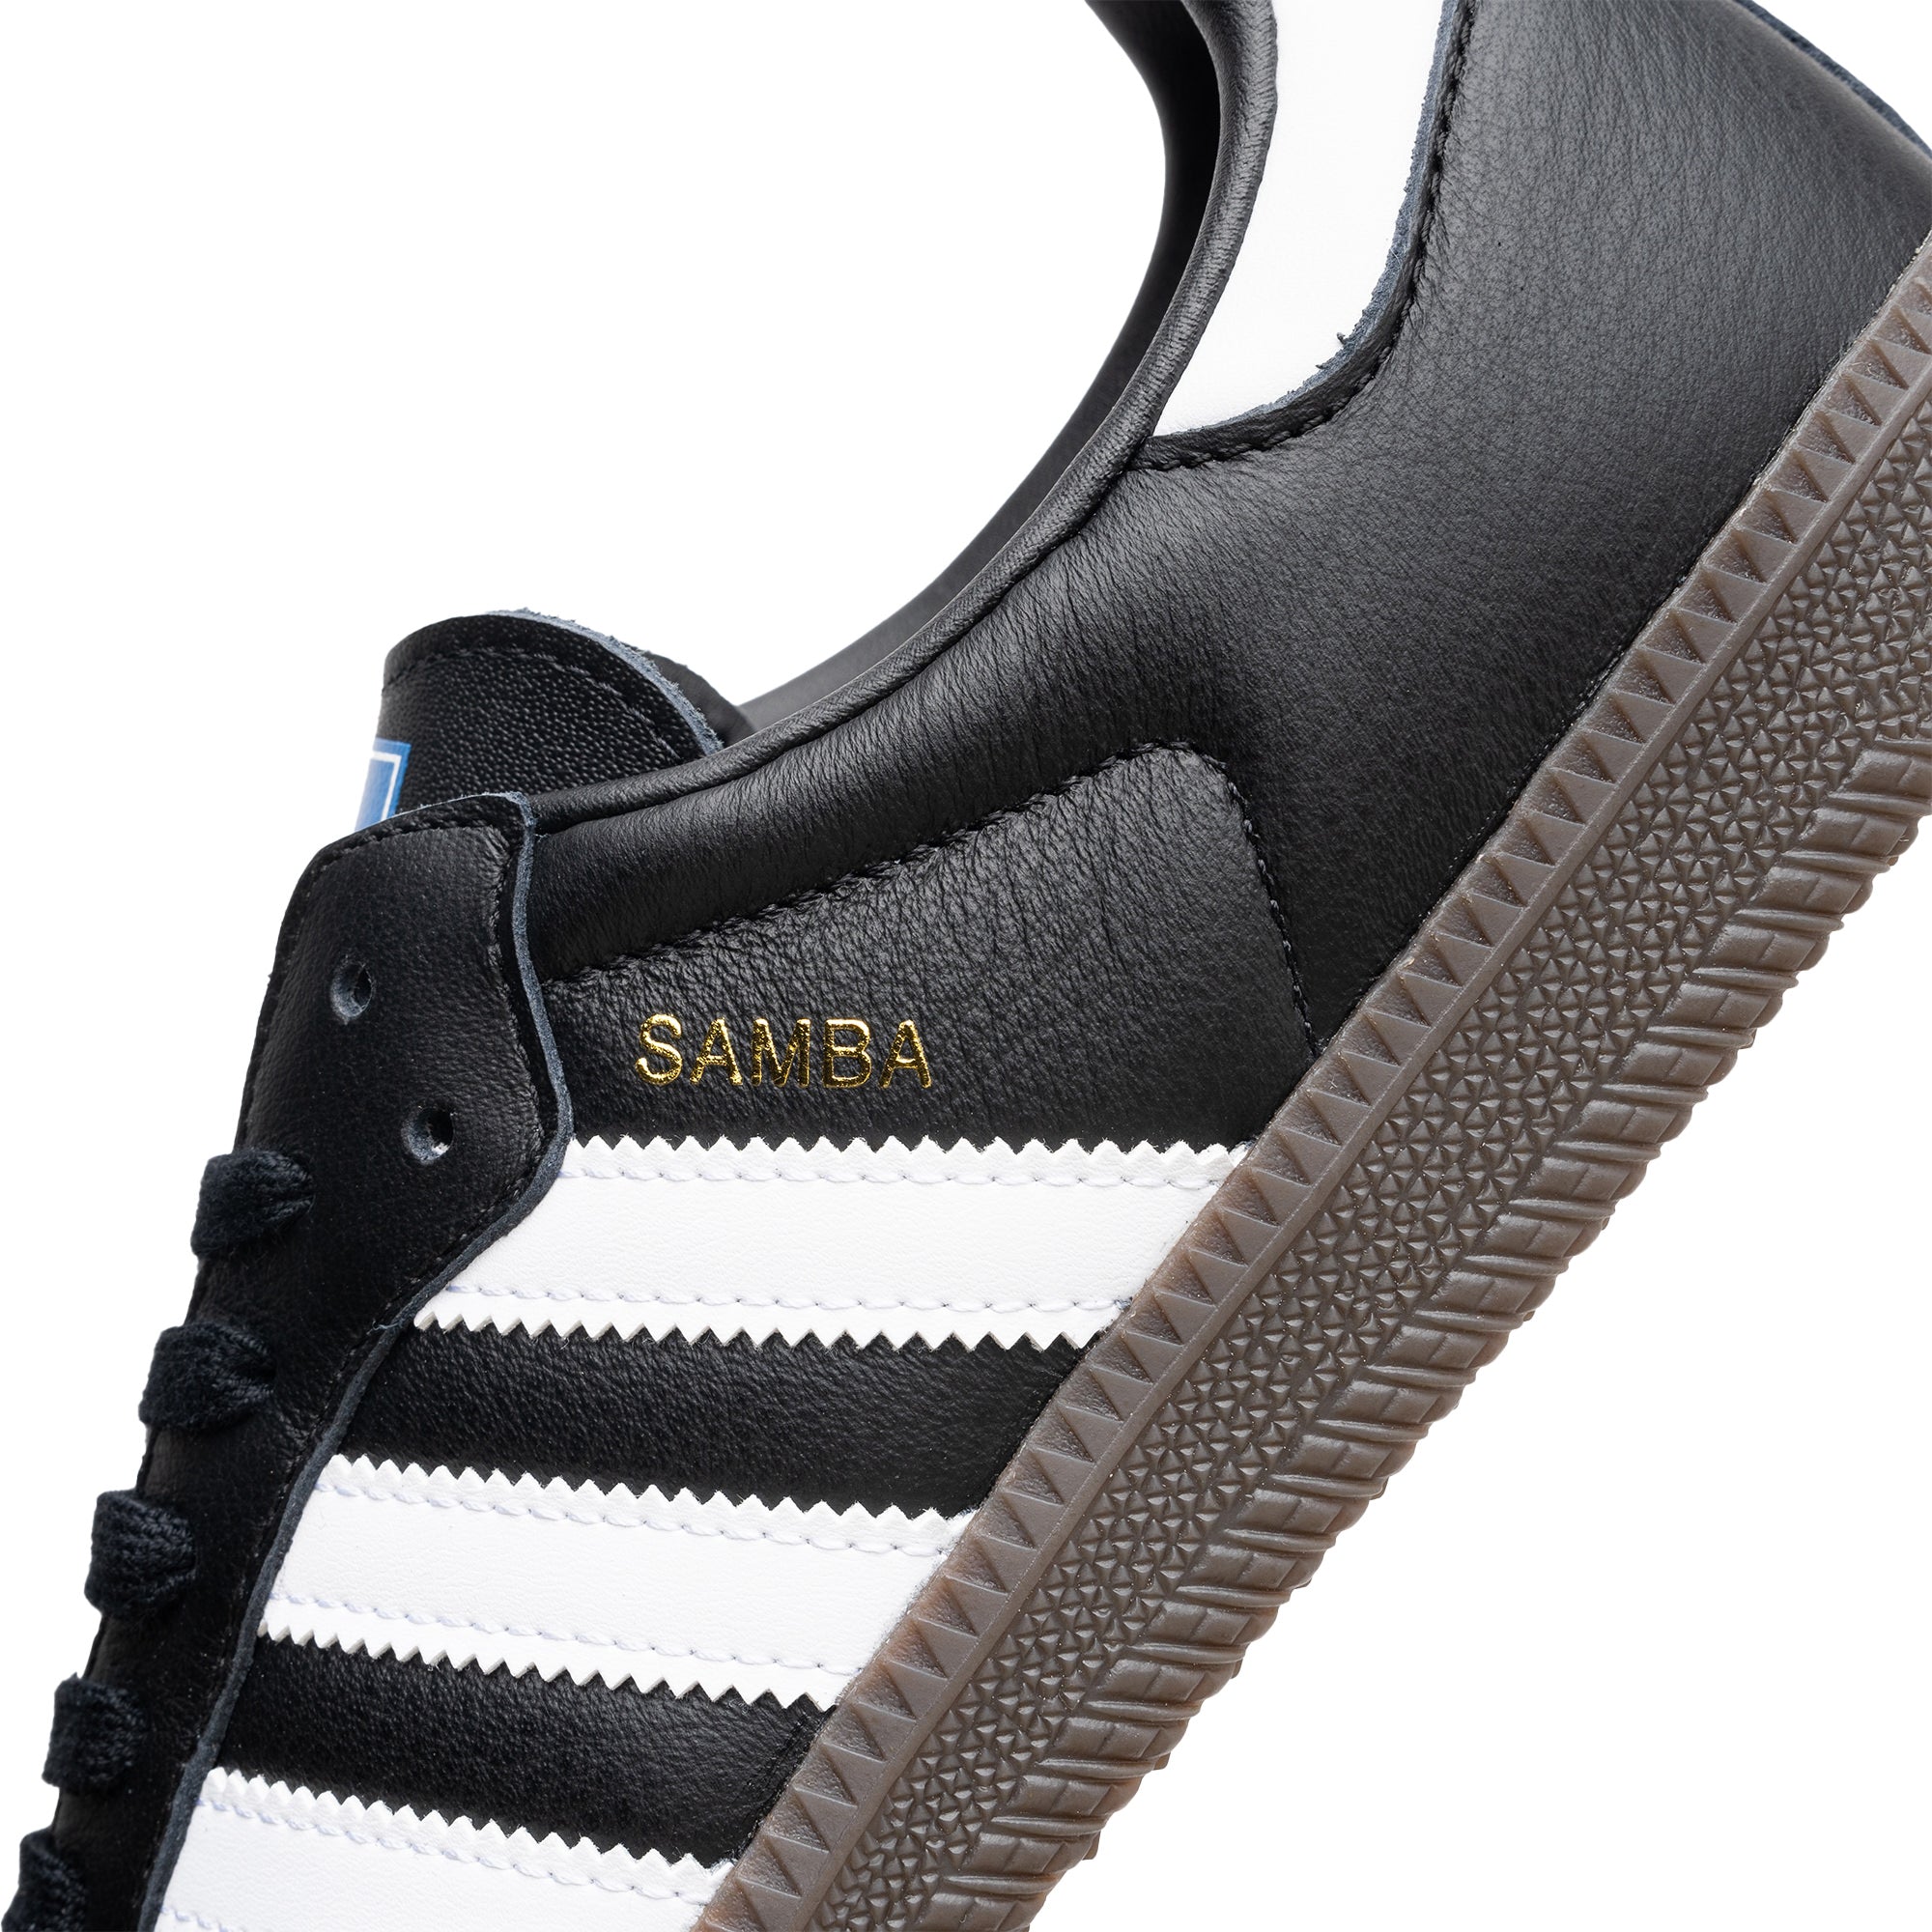 Adidas Samba OG B75807 Black